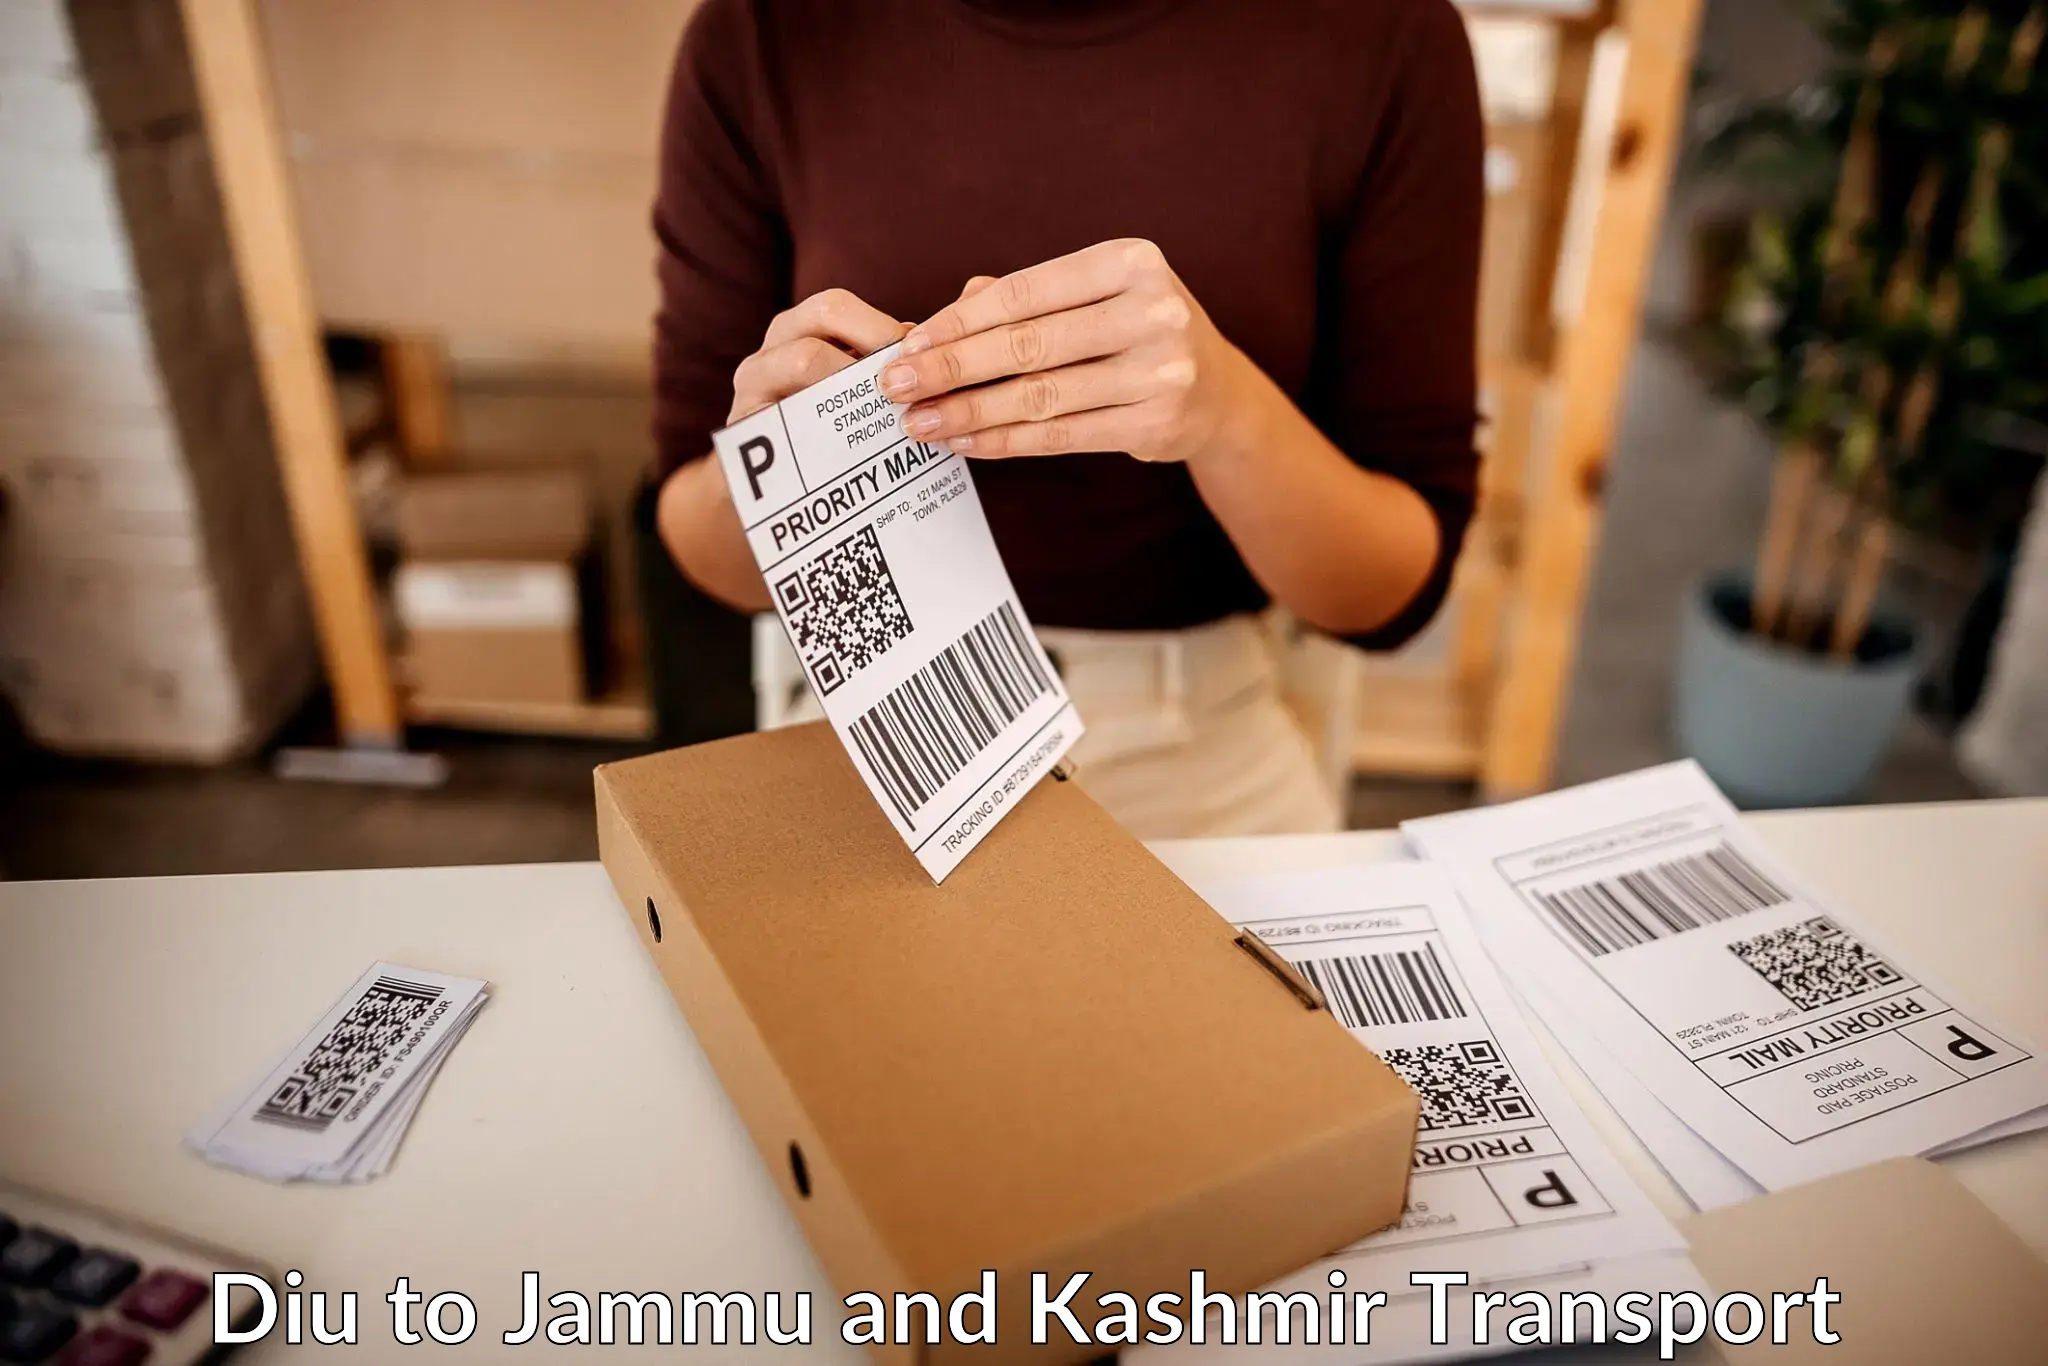 Container transport service Diu to Jammu and Kashmir